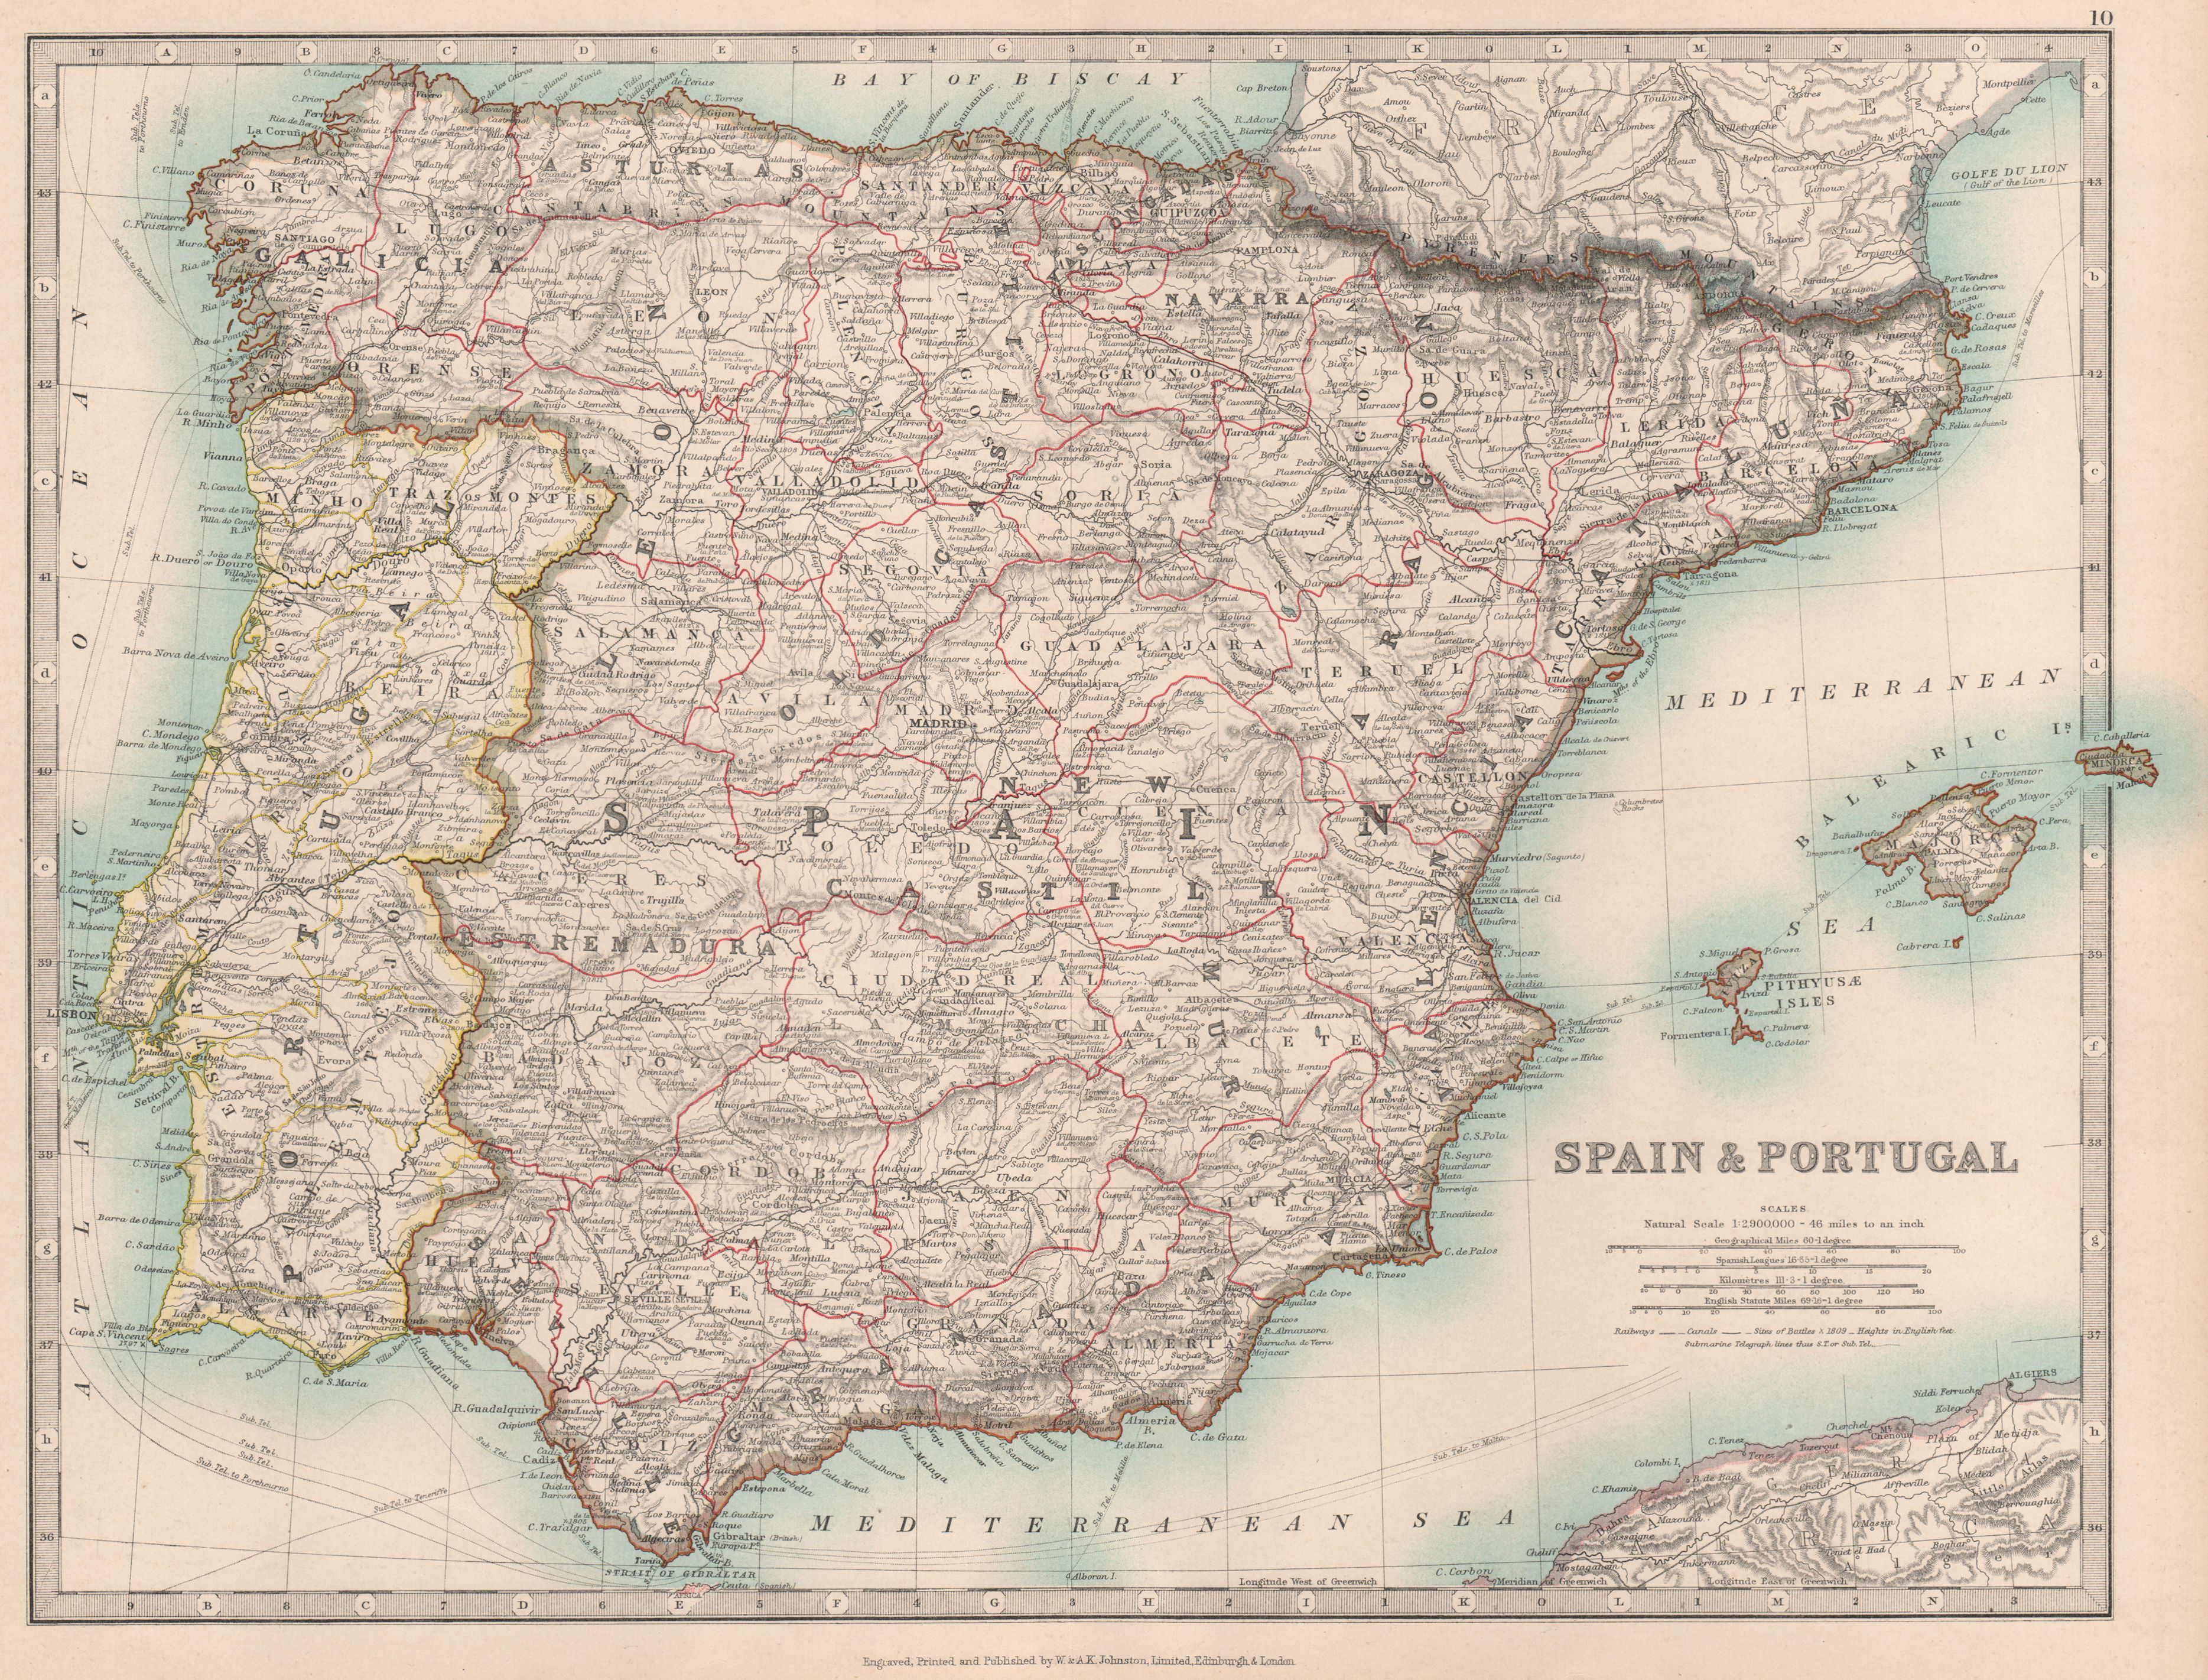 Associate Product SPAIN & PORTUGAL showing Napoleonic battlefields & dates. JOHNSTON 1912 map